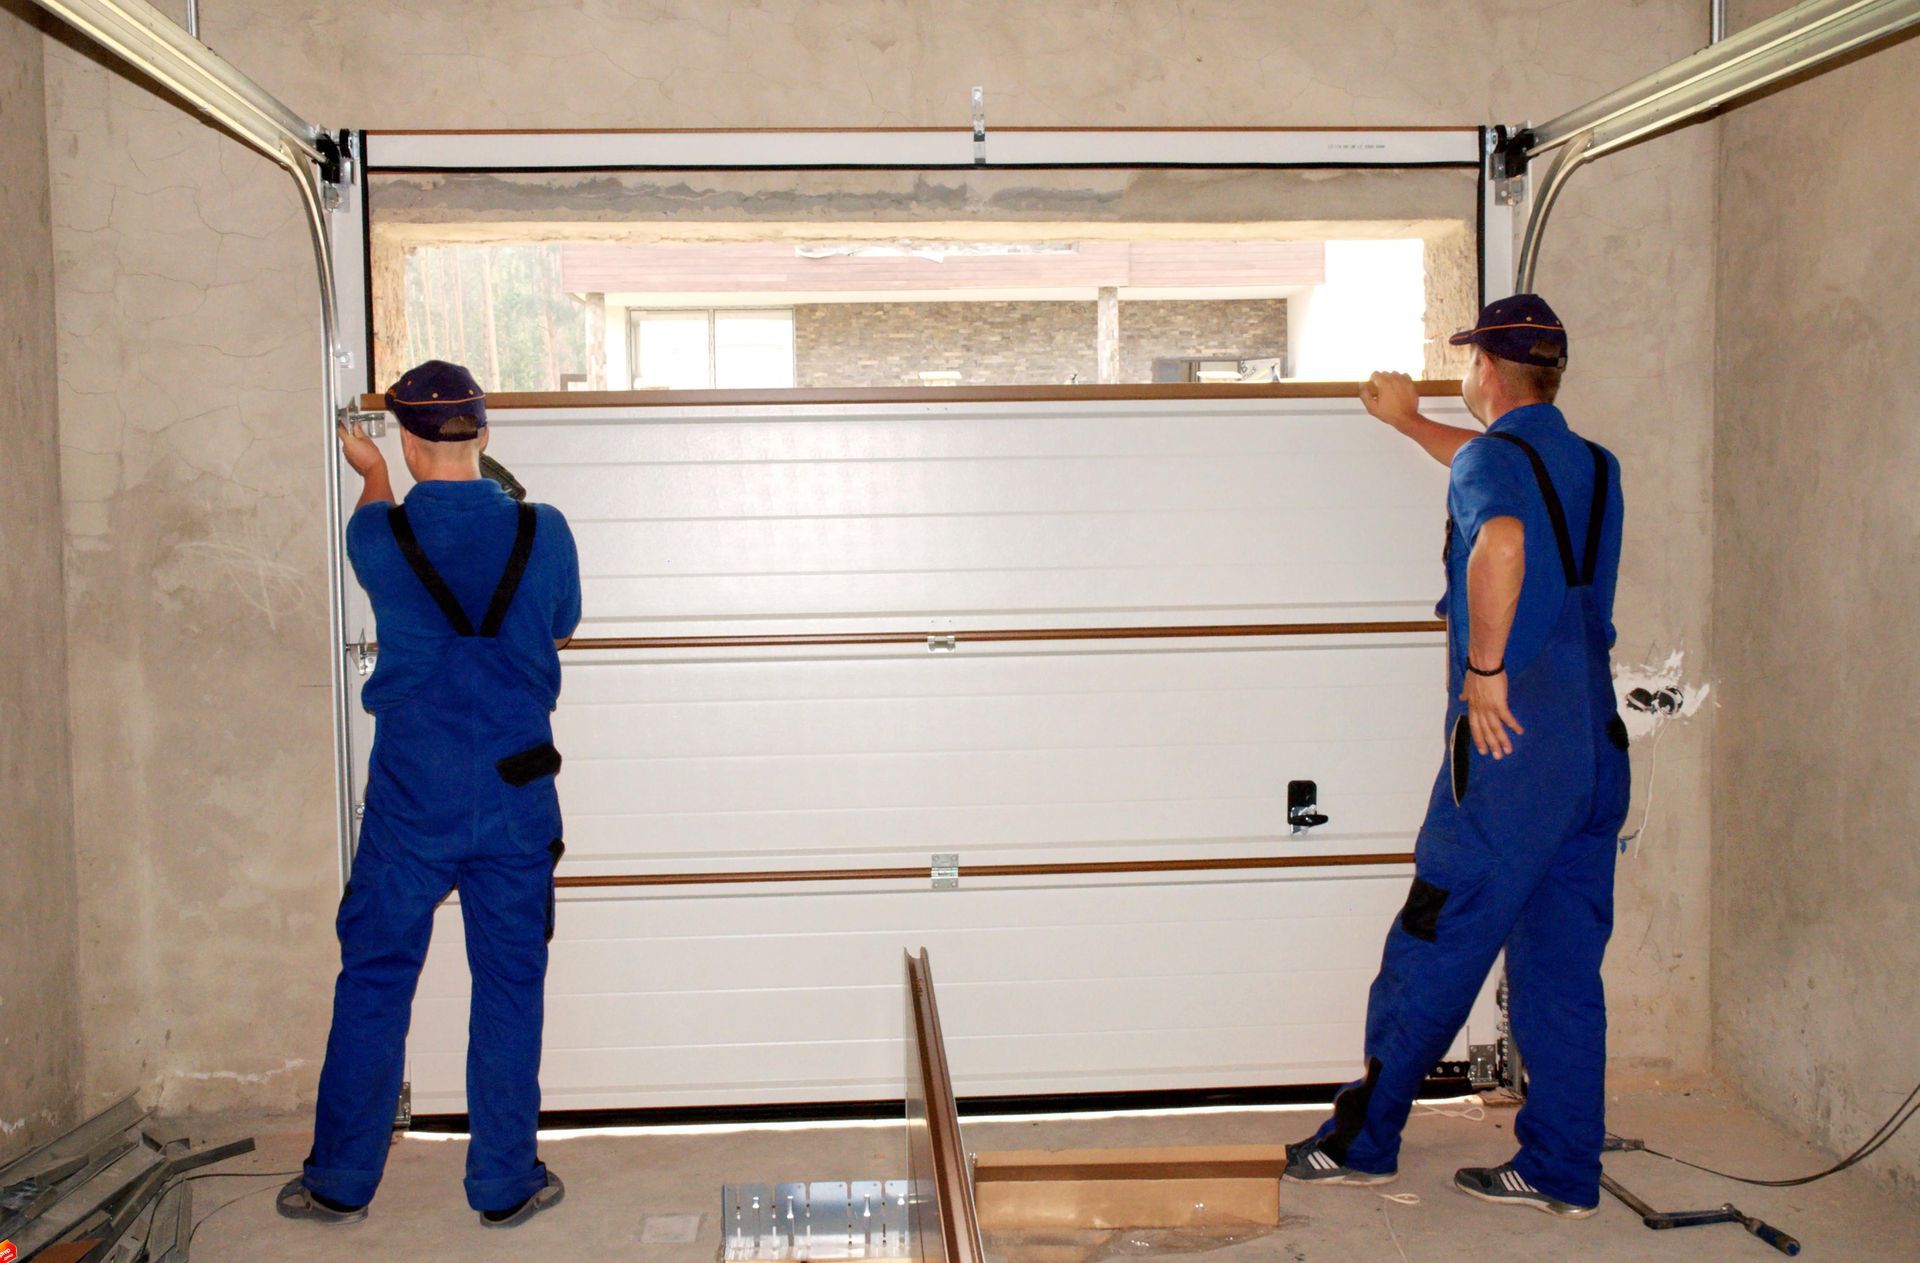 Two men are installing a garage door in a garage.